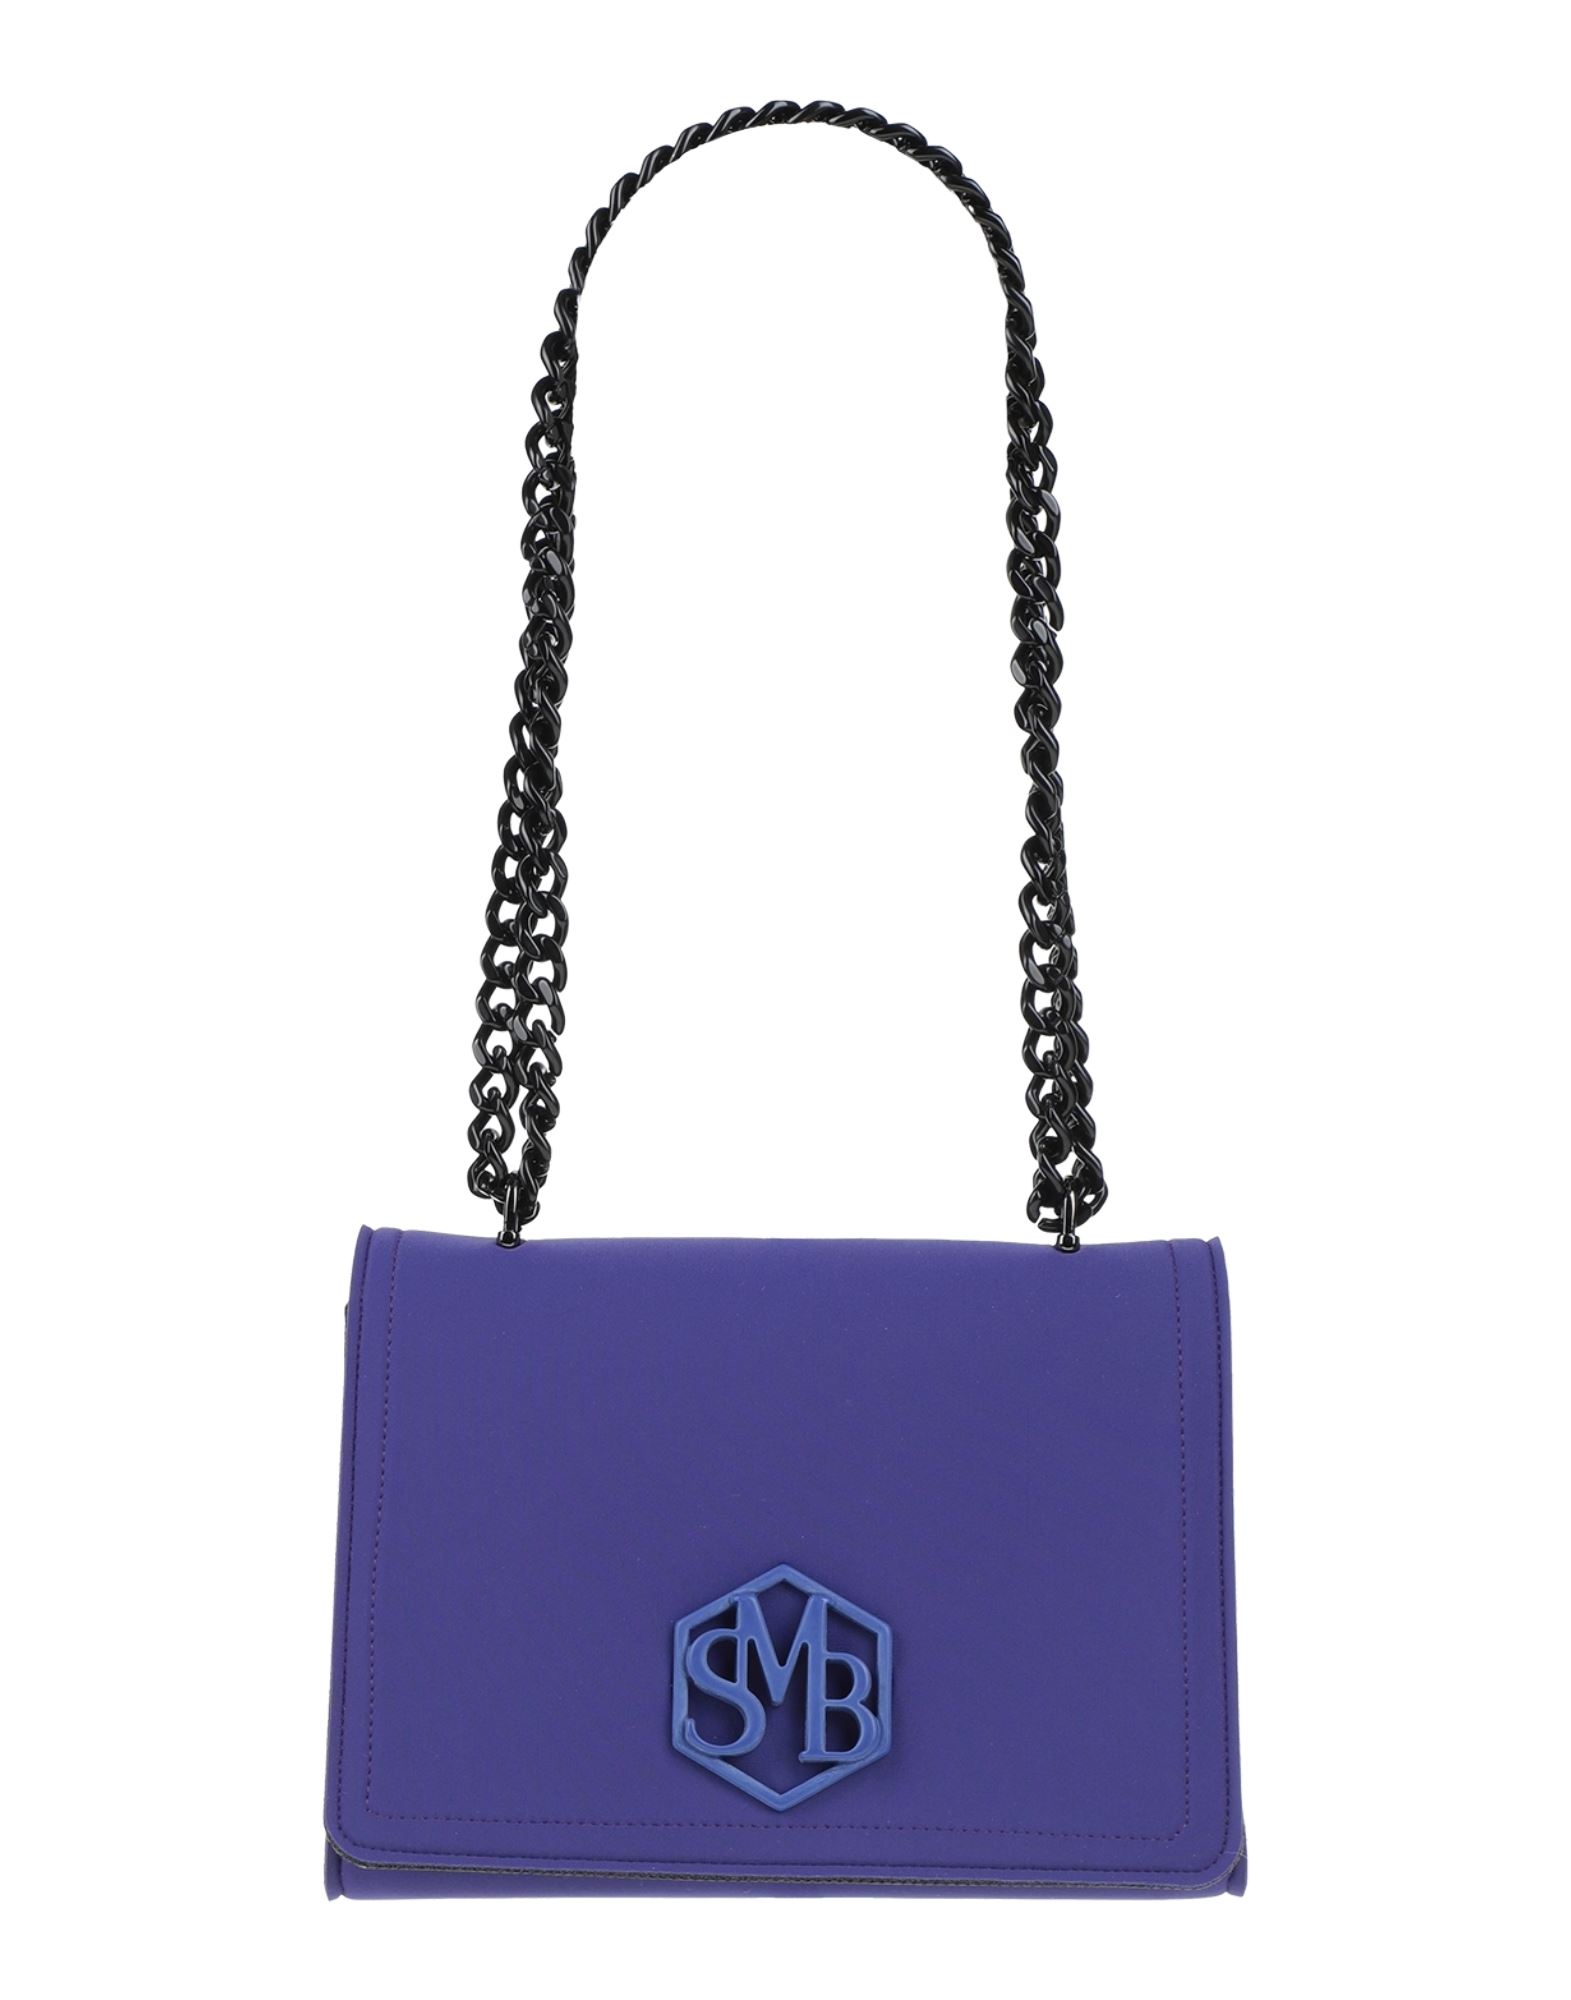 Save My Bag Handbags In Purple